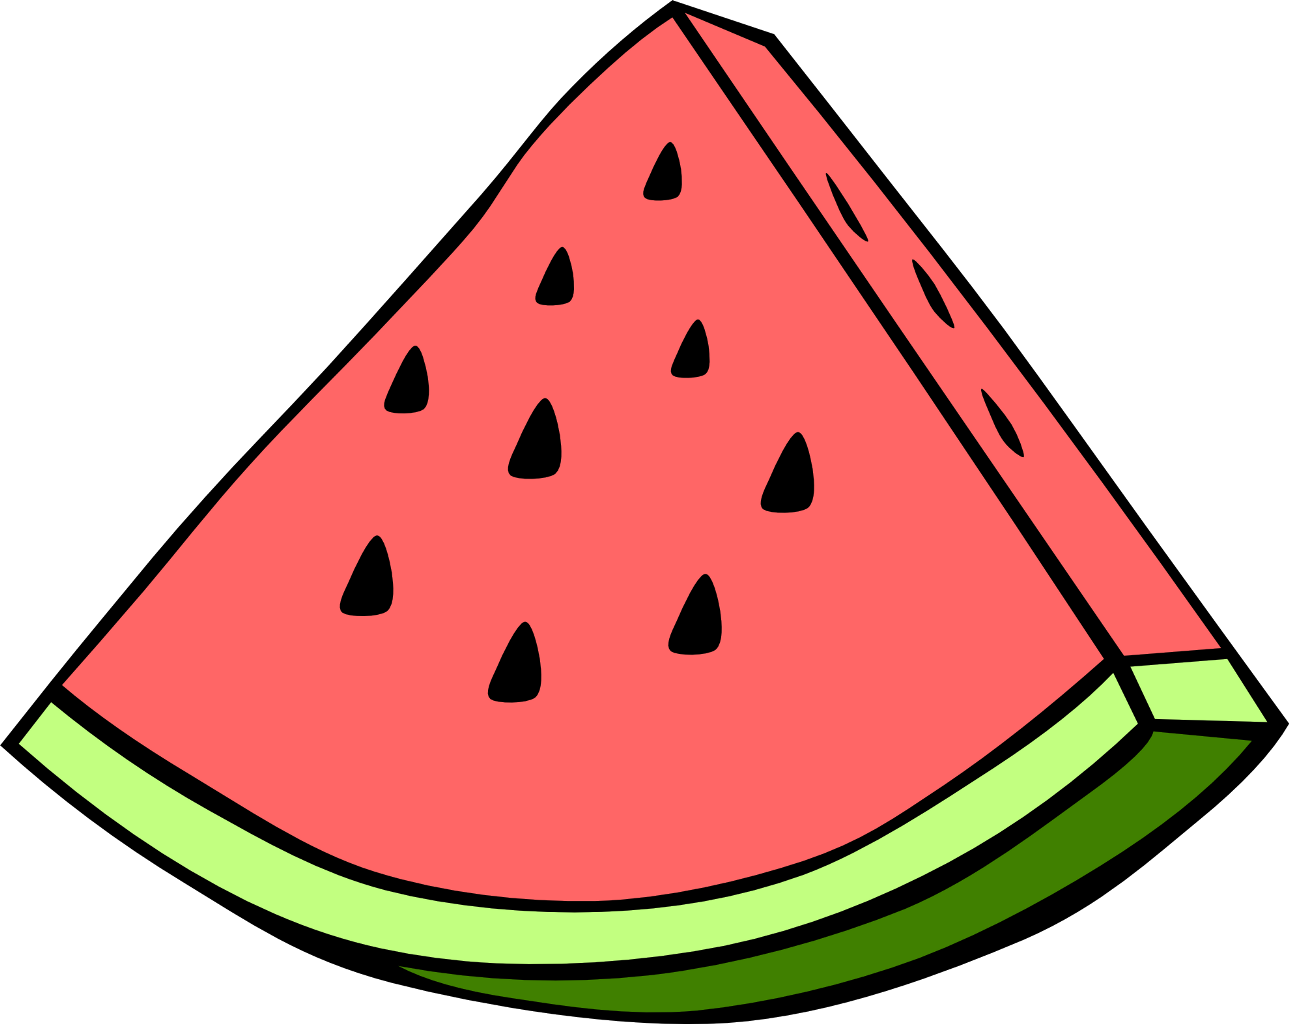 Fruit clipart kawaii. Watermelon cute freetoedit